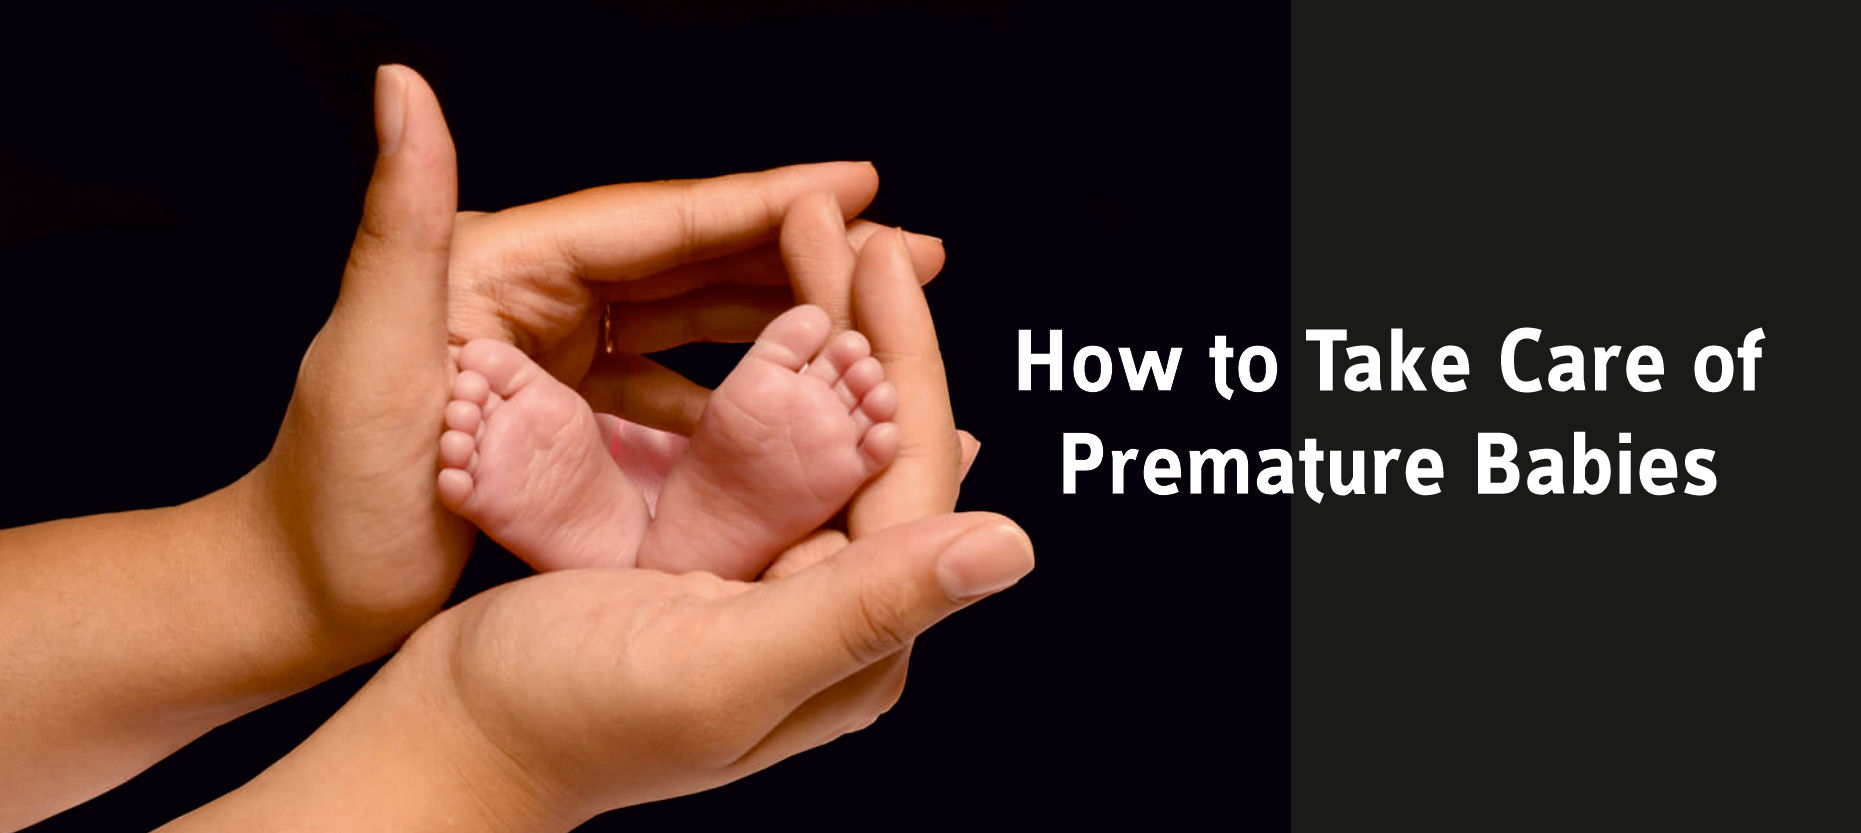 Take Care of Premature Babies